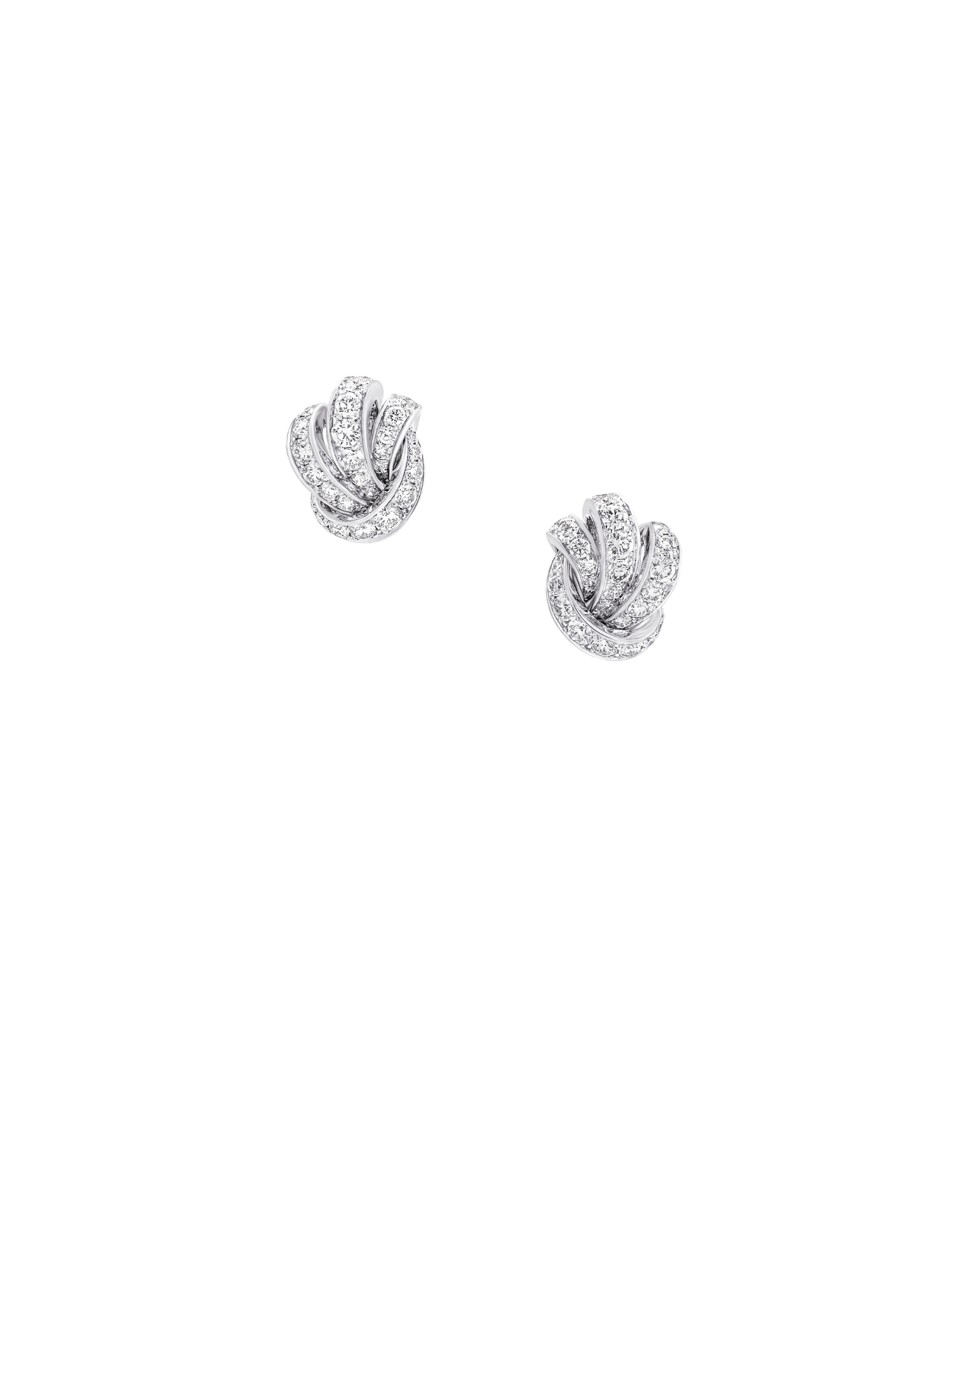 Graff Knot Collection round diamond earrings. Photo: Graff